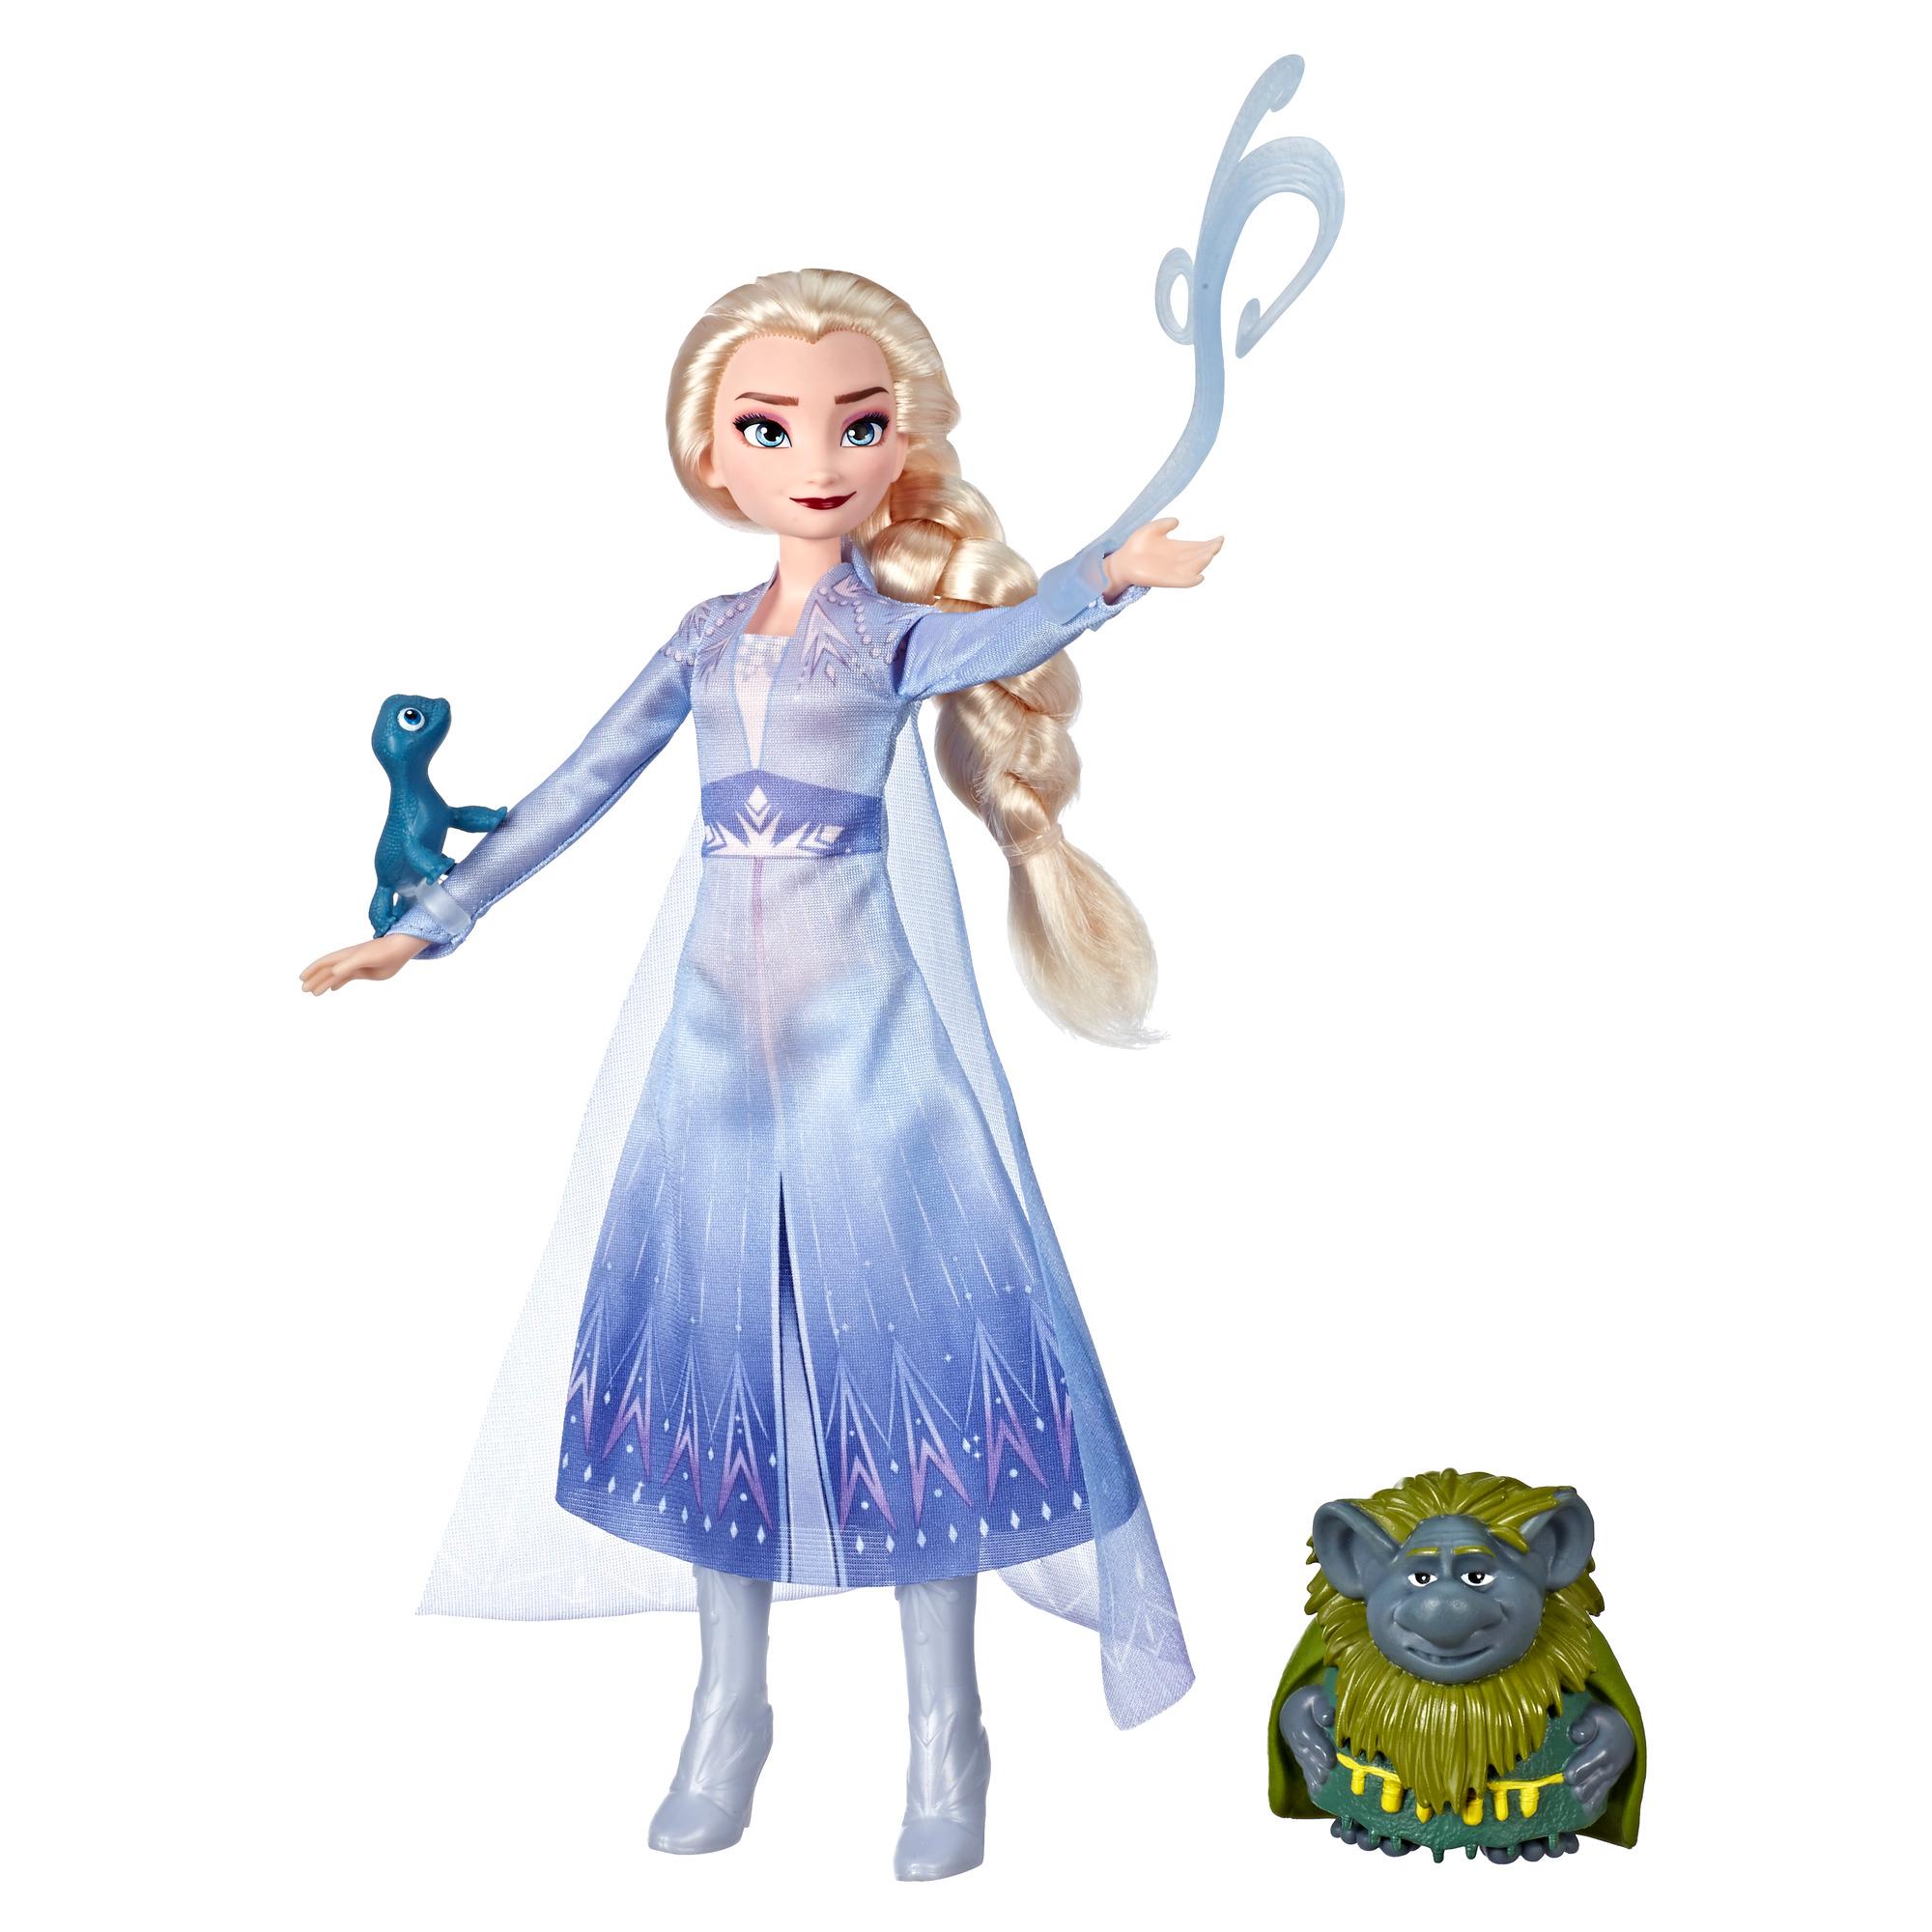 Frozen 2 Papusa Elsa cu accesorii